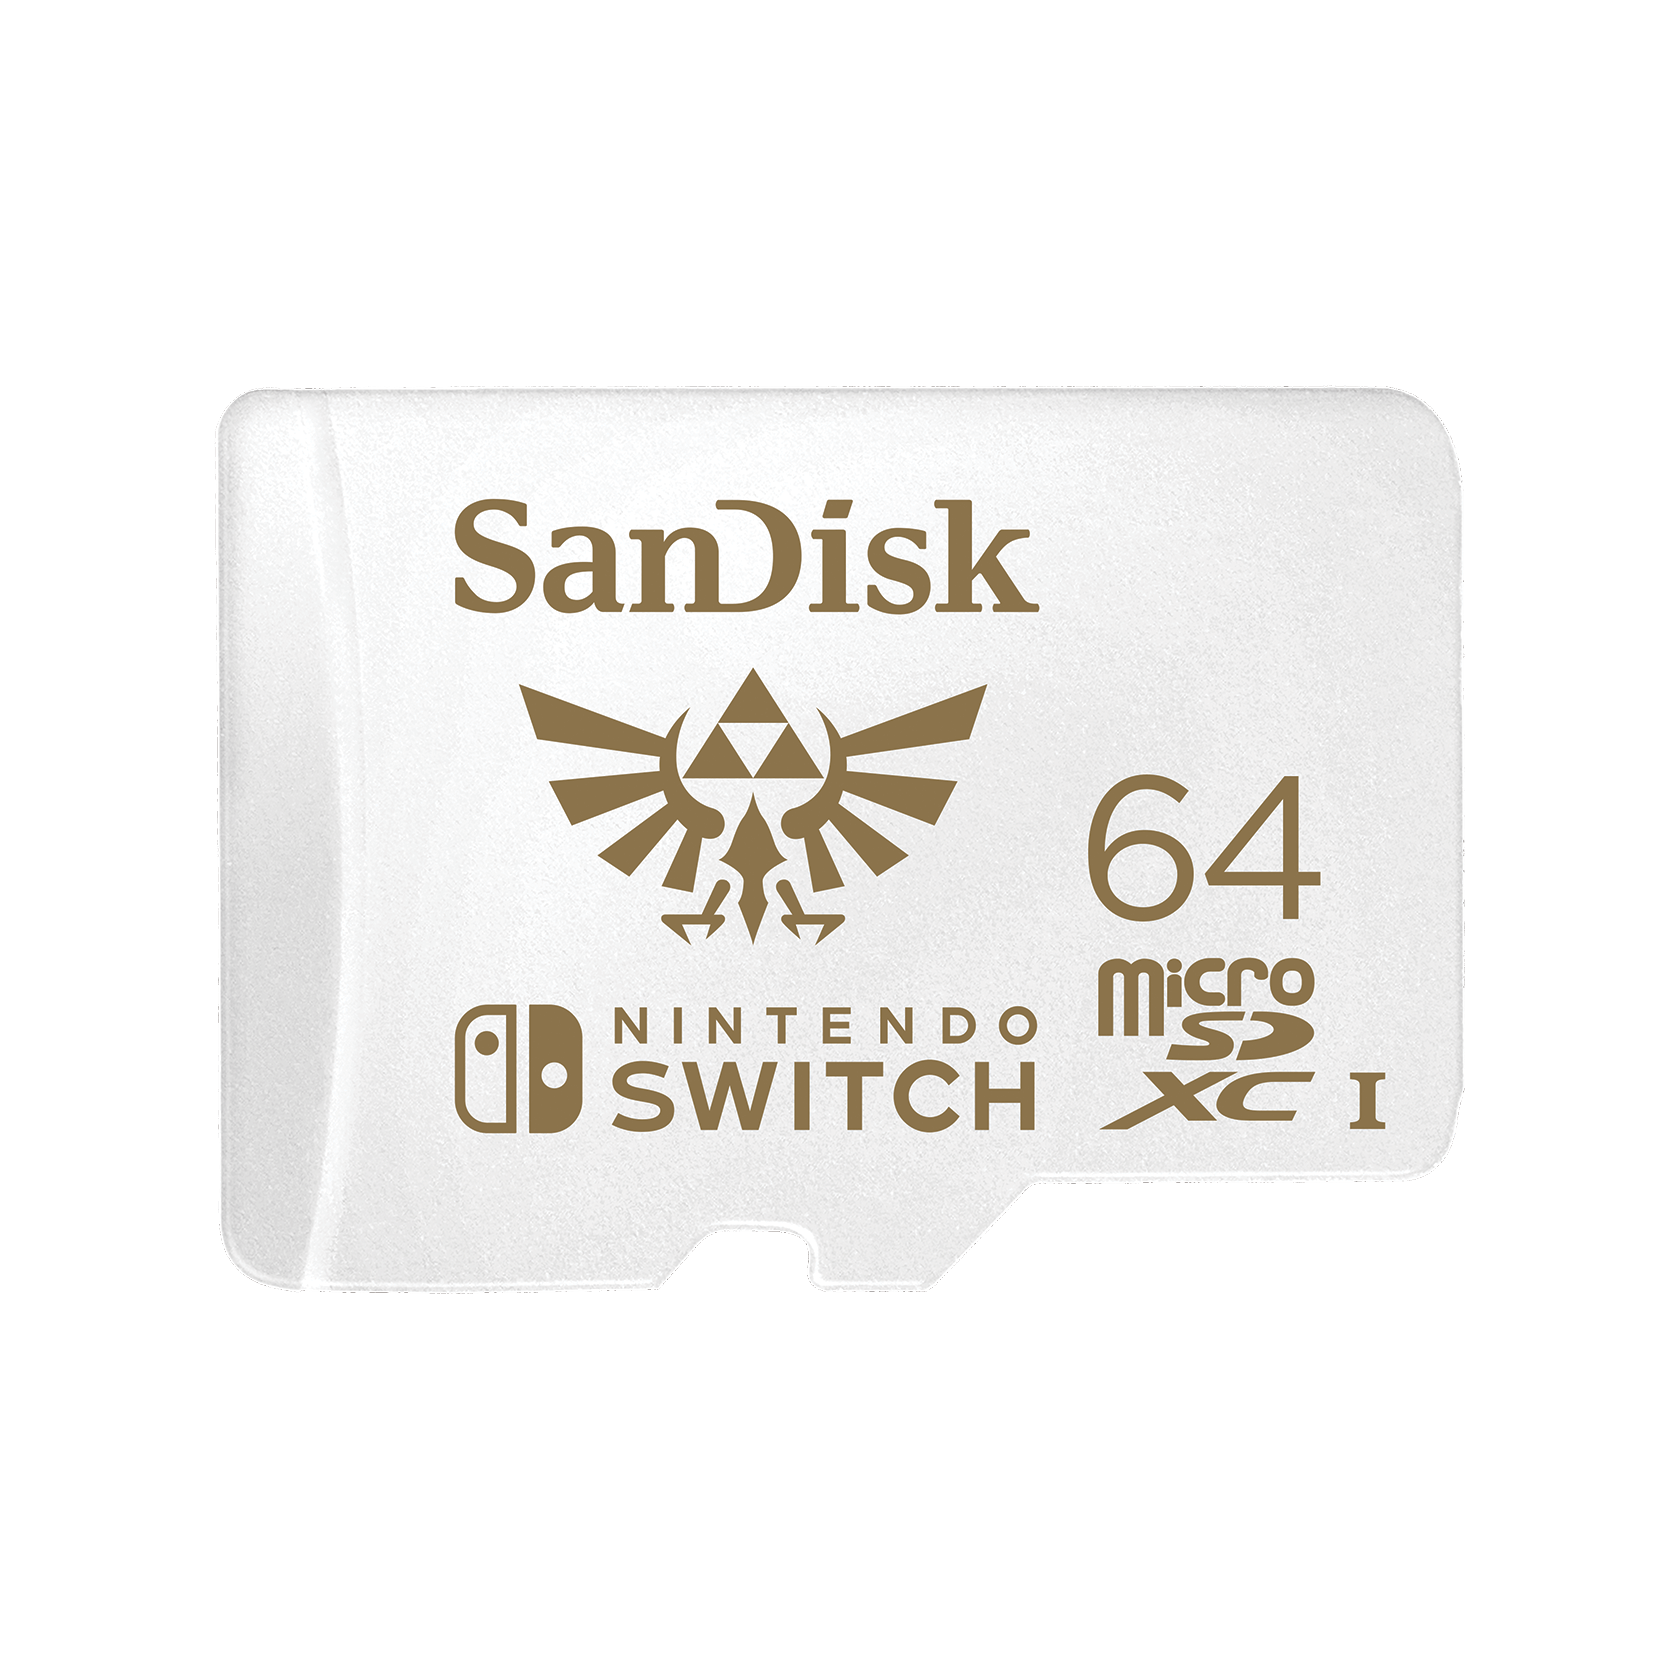 nintendo switch micro sd card price